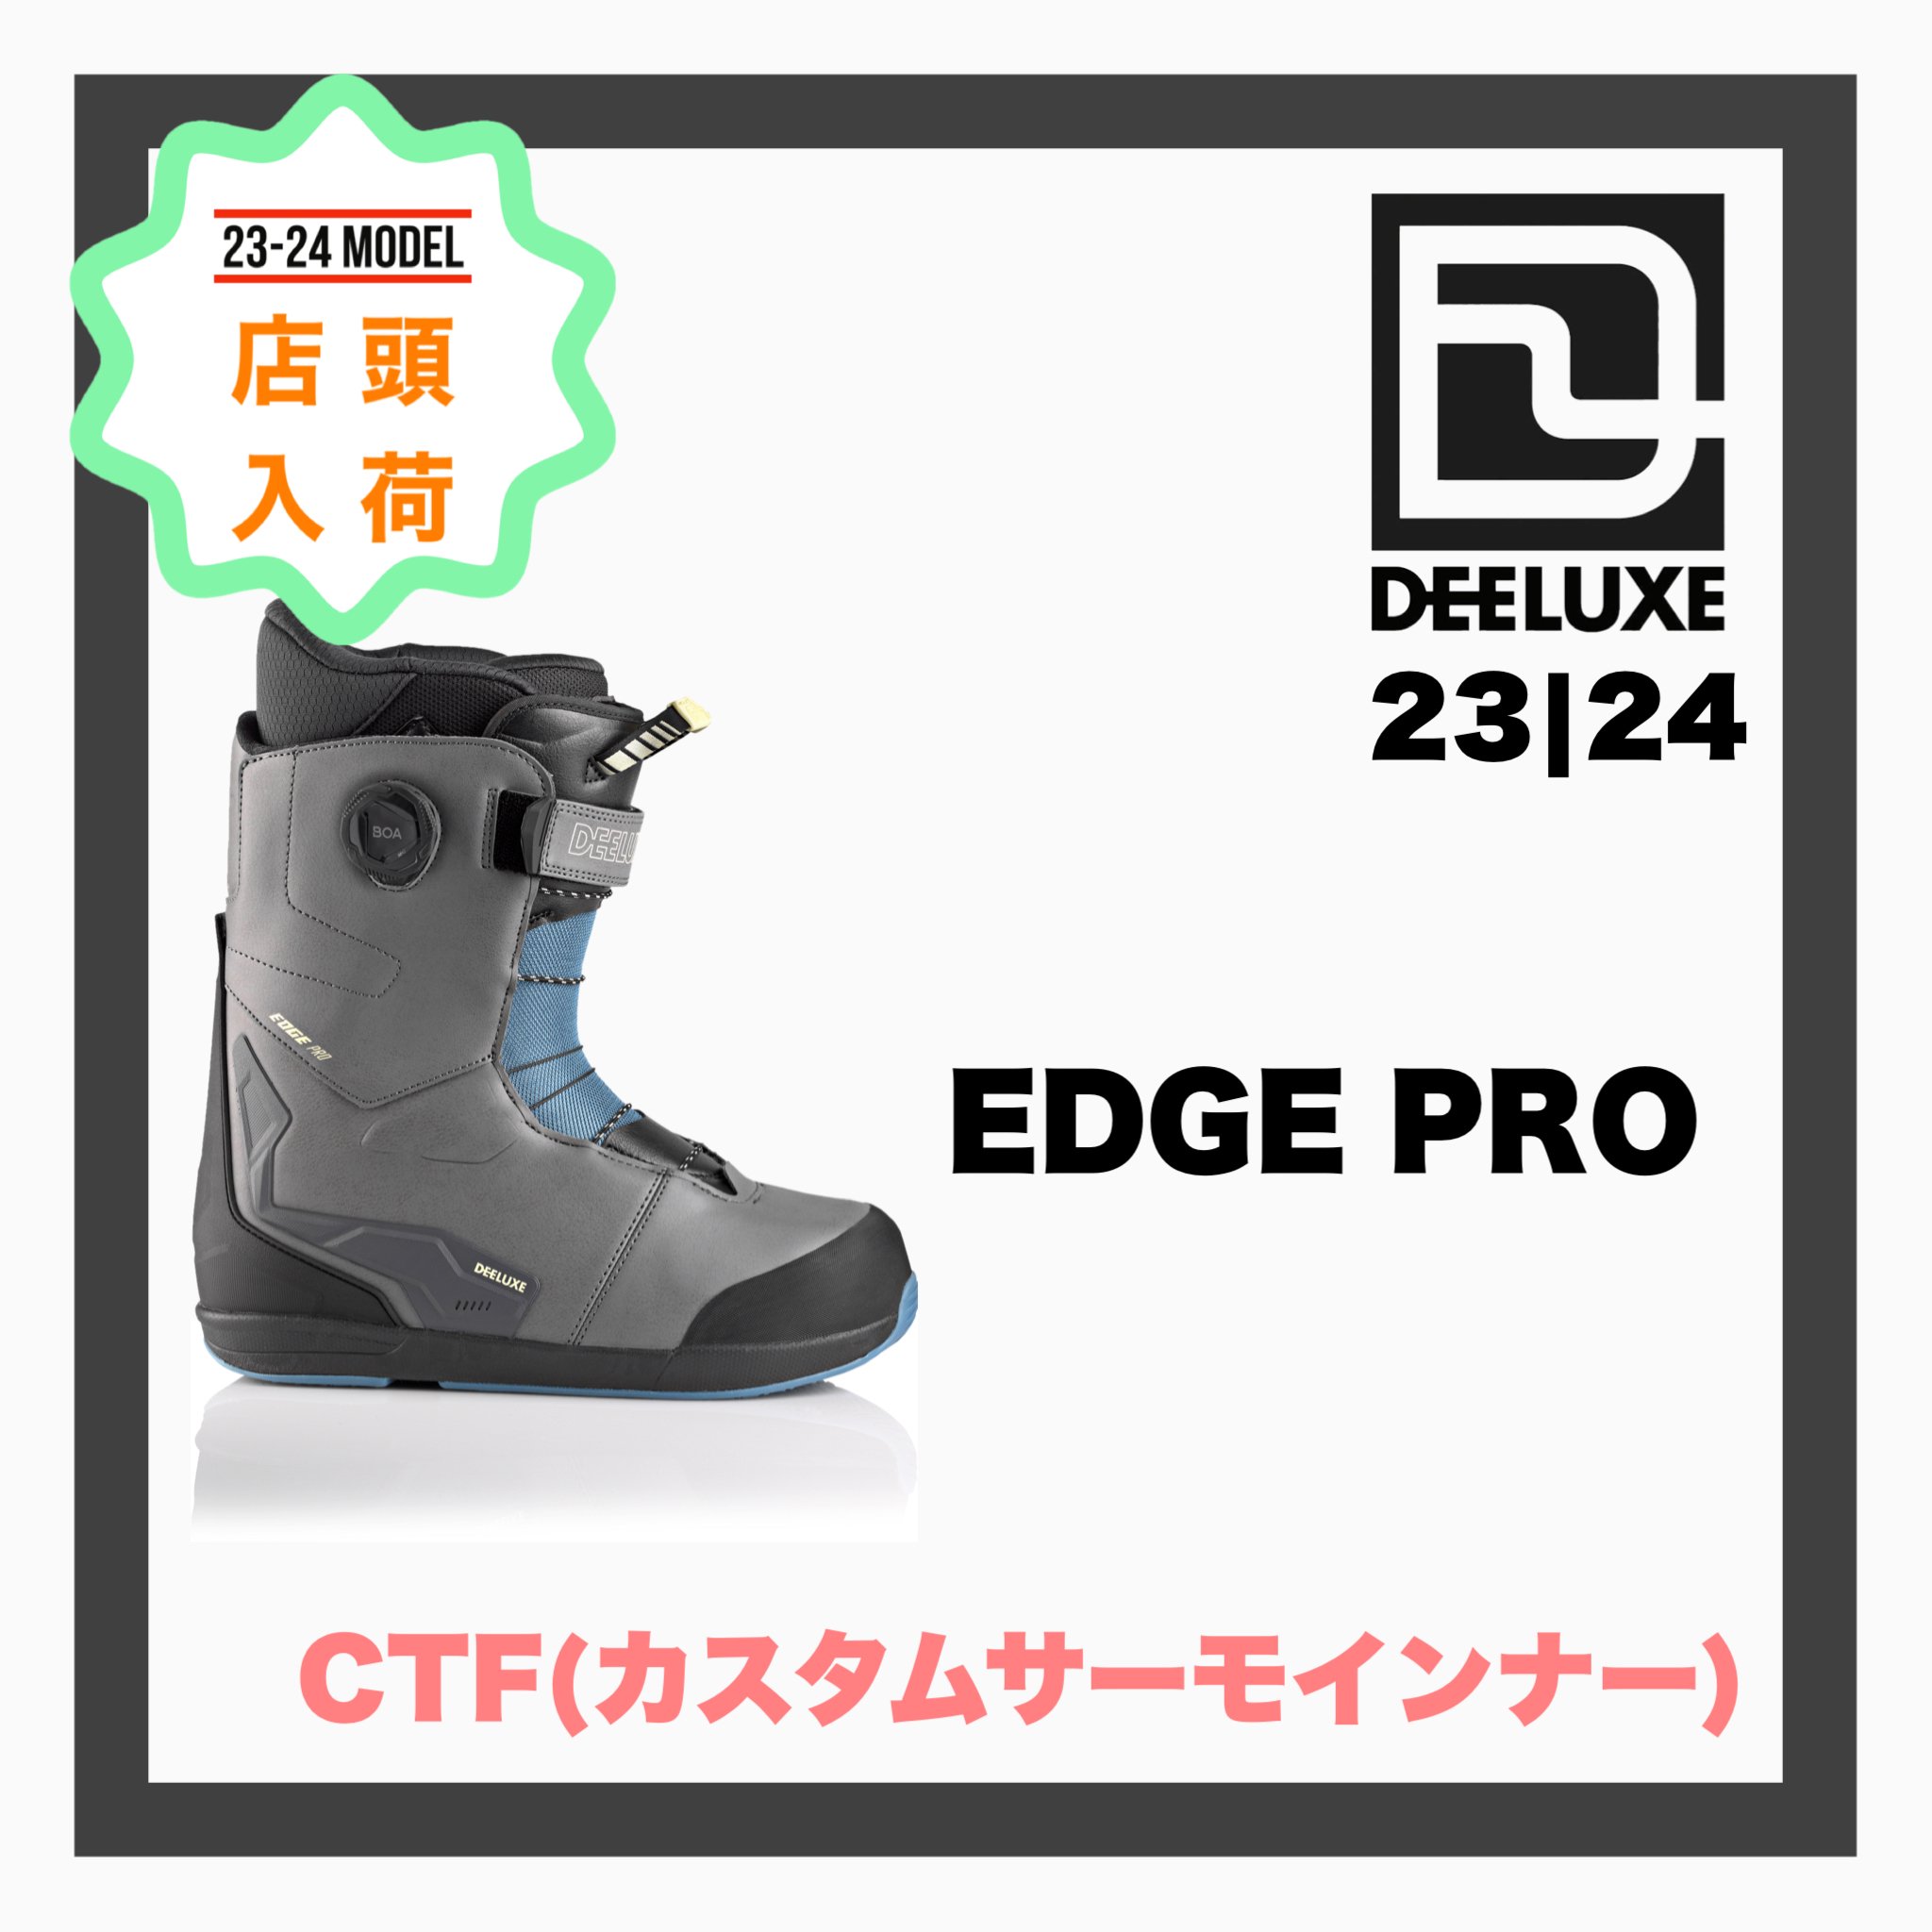 22-23 Deeluxe Edge Pro CTF カスタムサーモ  28.5順に26311265センチです